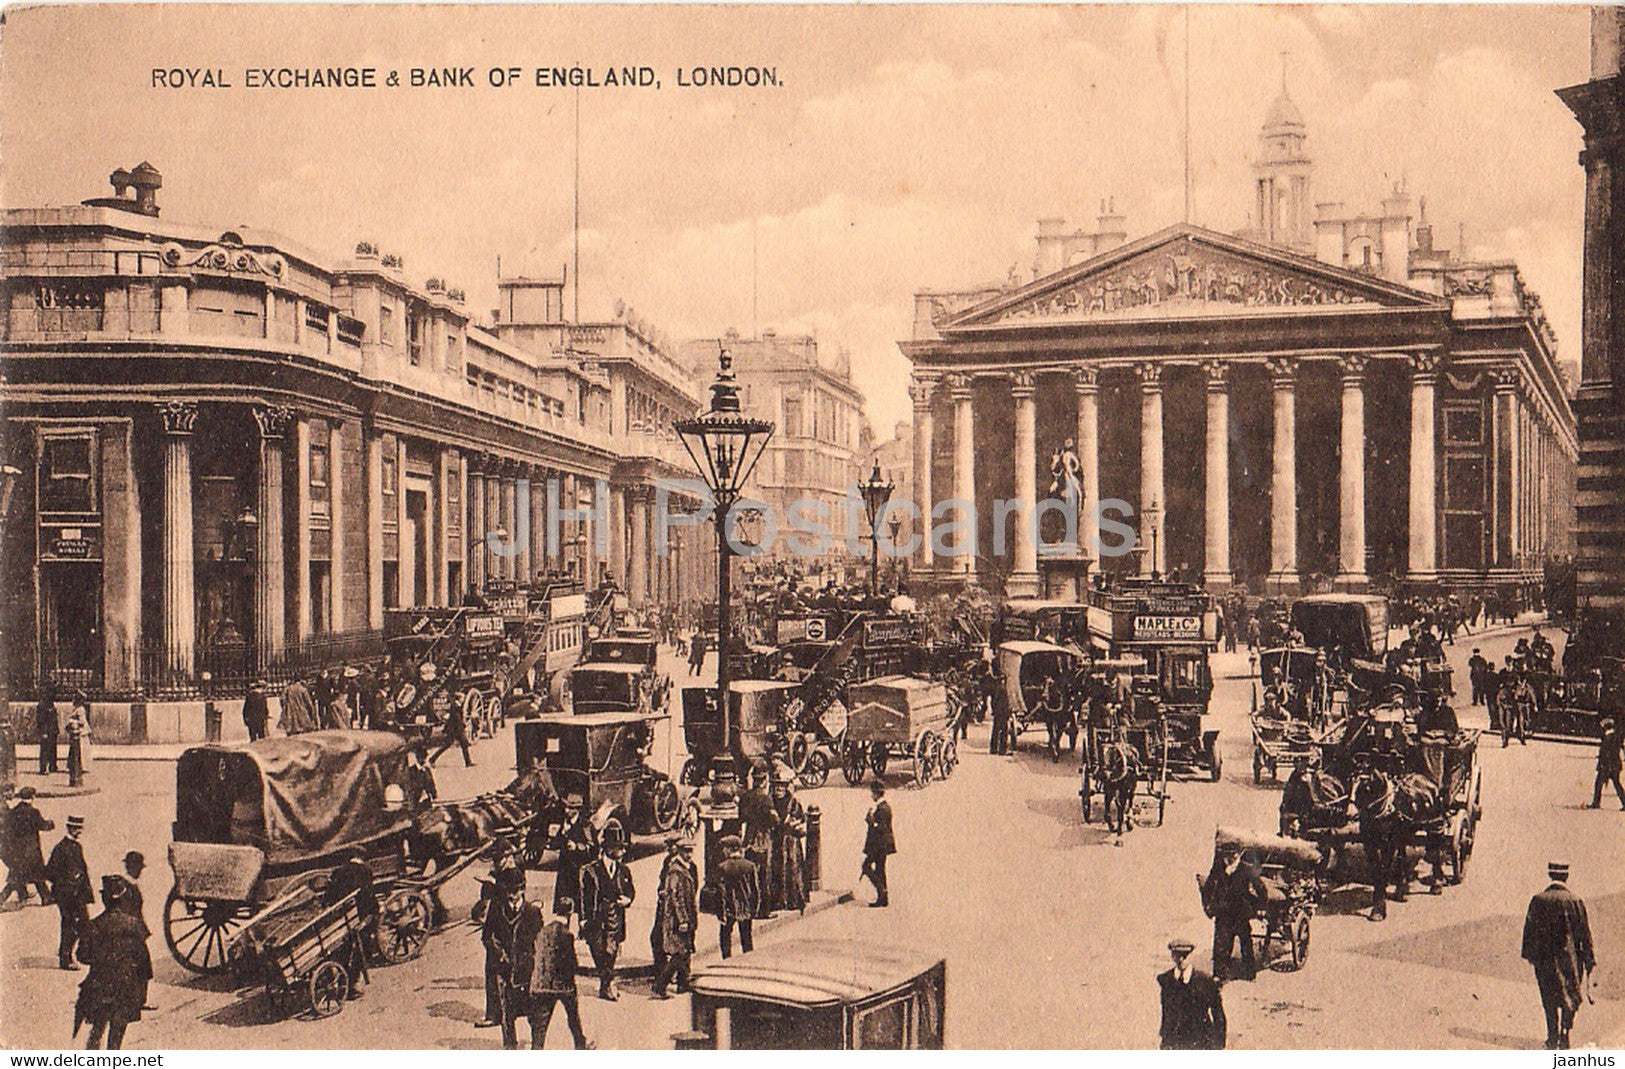 London - Bank of England & Royal Exchange - cars - 1219 - old postcard - England - United Kingdom - unused - JH Postcards